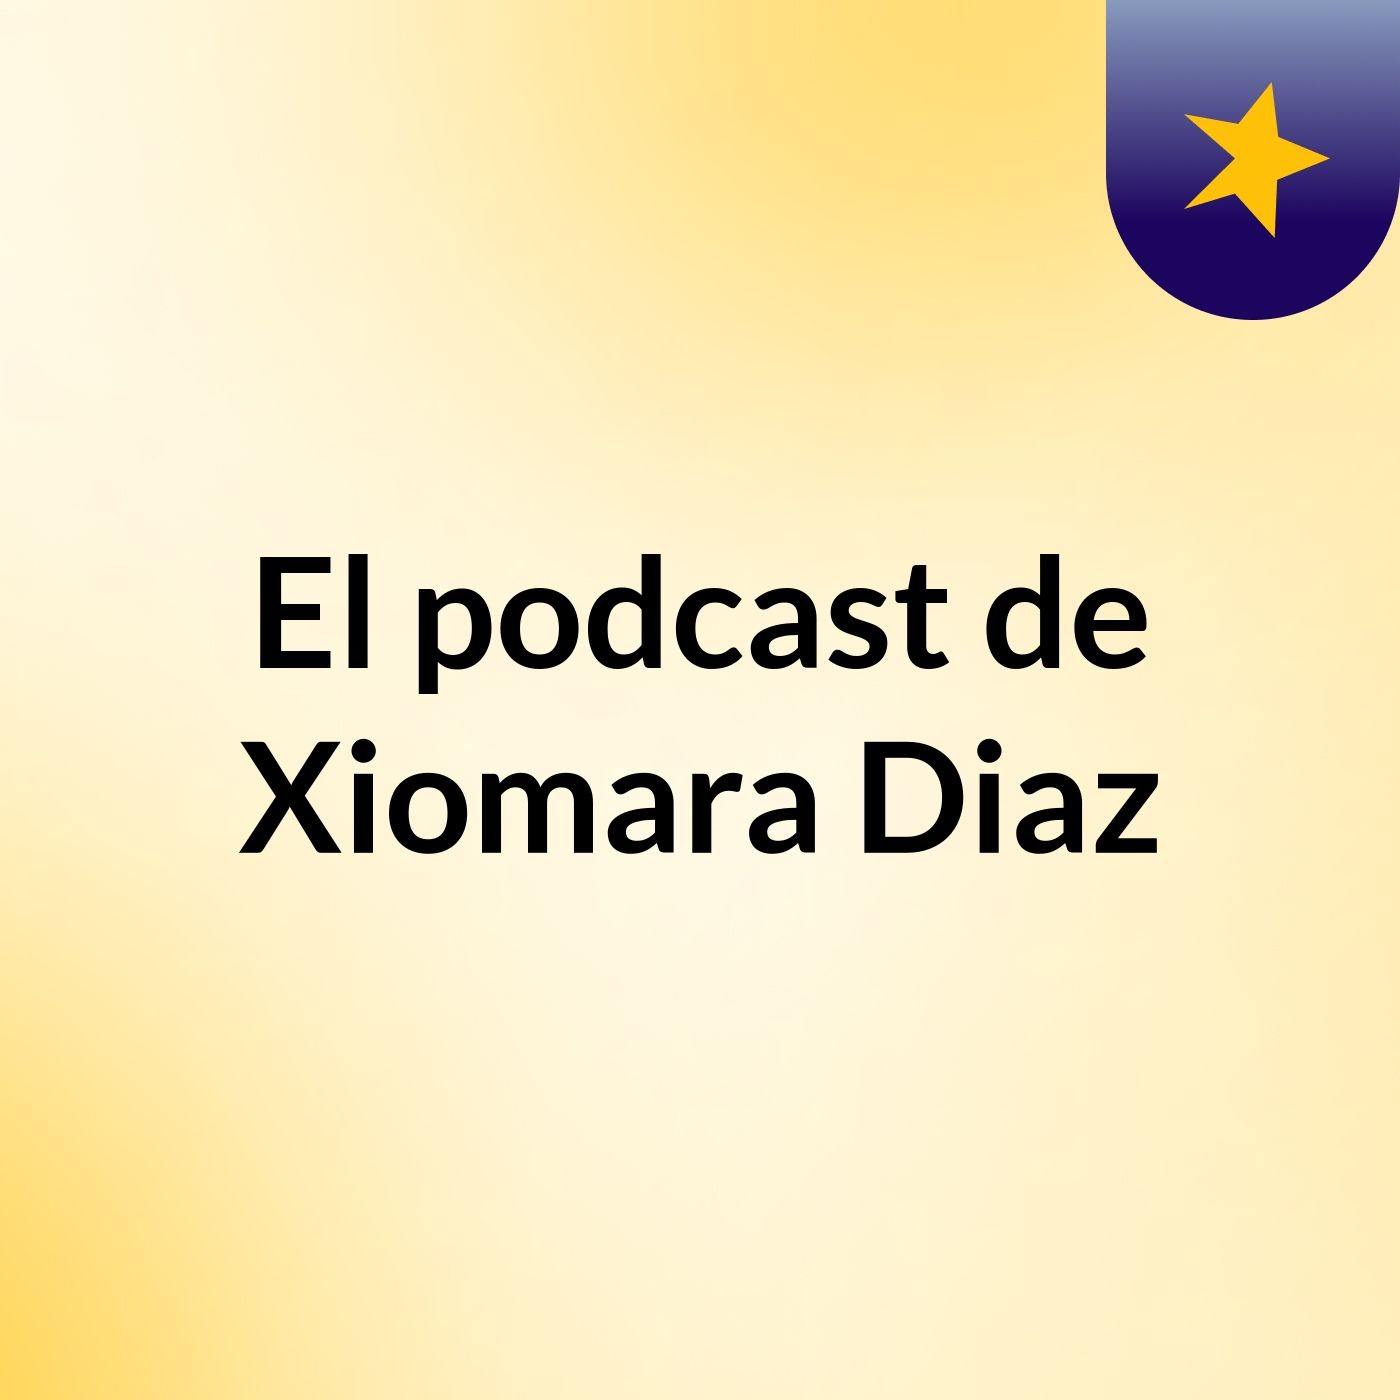 Episodio 4 - El podcast de Xiomara Diaz